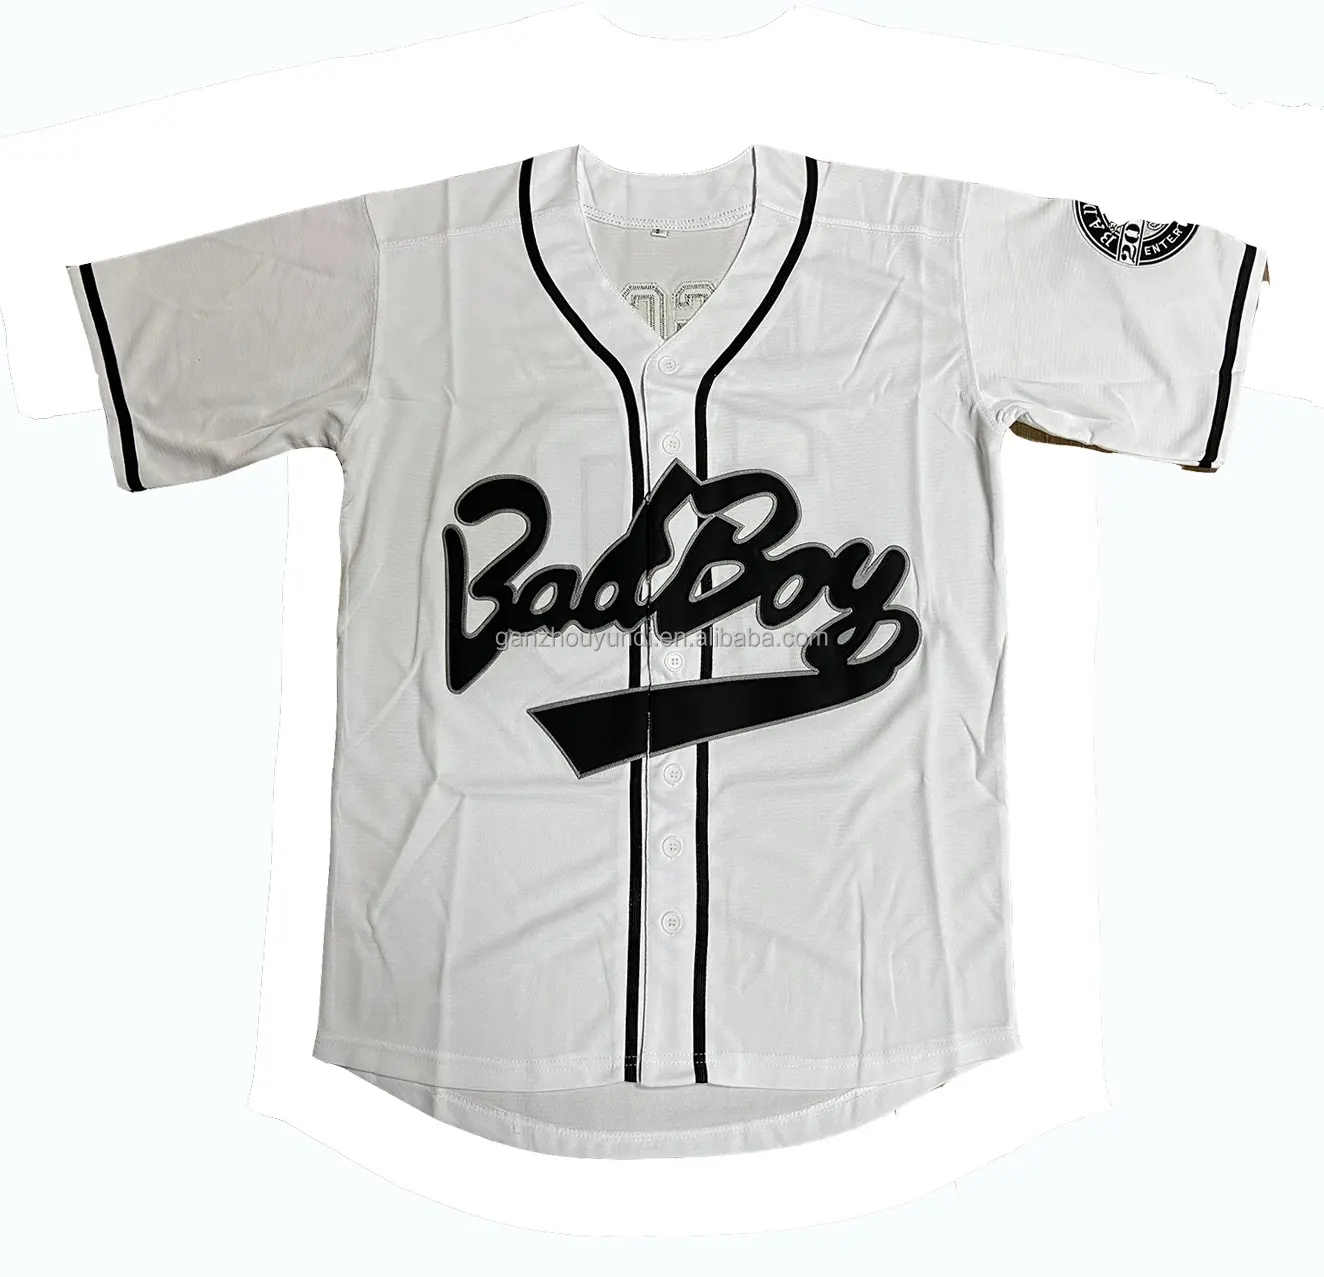 Por encargo blanco en blanco Badboy #10 botón completo béisbol camiseta Club Jersey